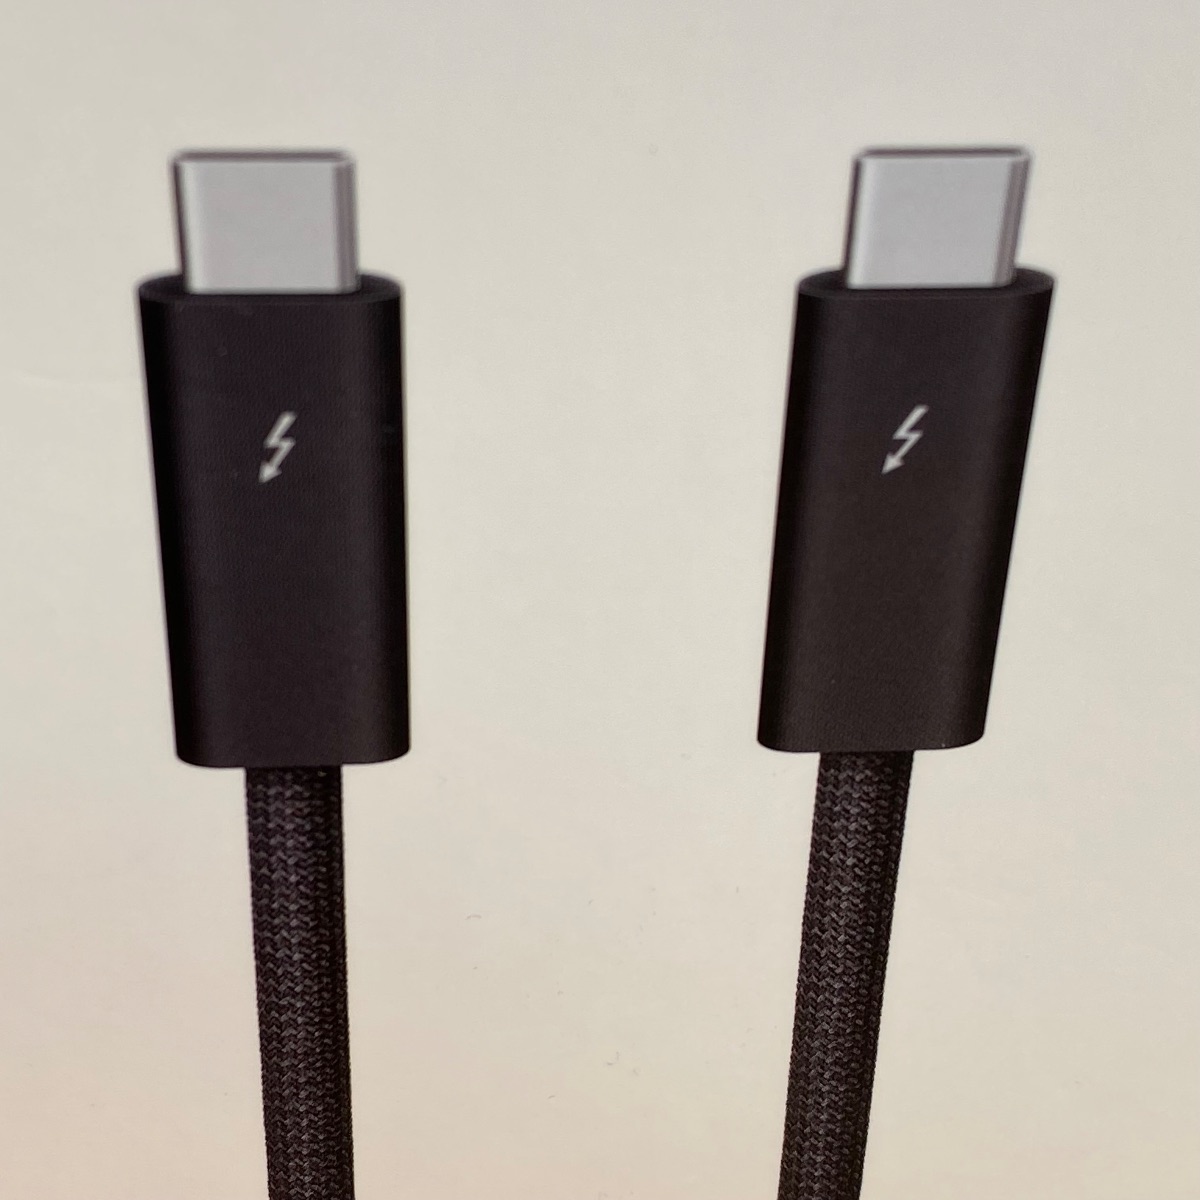 Apple Thunderbolt 3 Pro Cable 2m USB-C Sealed 100% Original A2279 MacBook iPhone ML8E3ZMA 0194252654200 (Brand New)